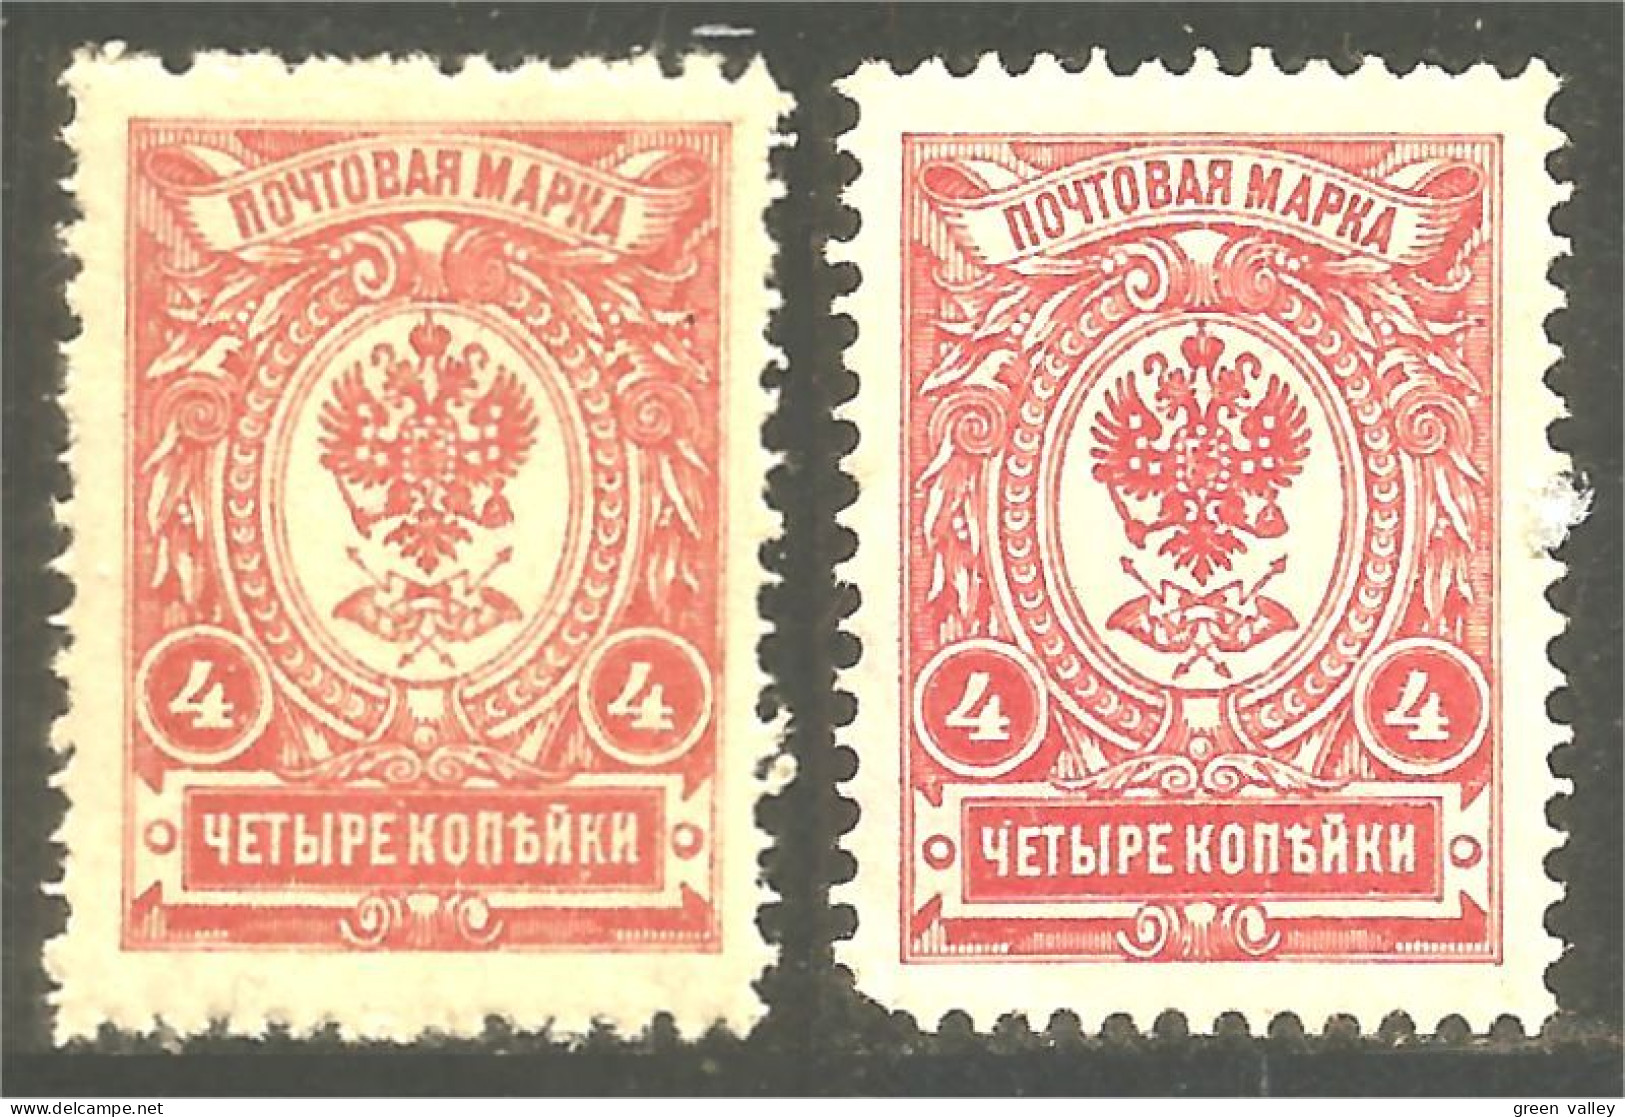 771 Russie 4k 1909 Carmine (mint) Carmine-rose (no Gum) Aigle Imperial Eagle Post Horn Cor Postal Varnish (RUZ-355) - Neufs